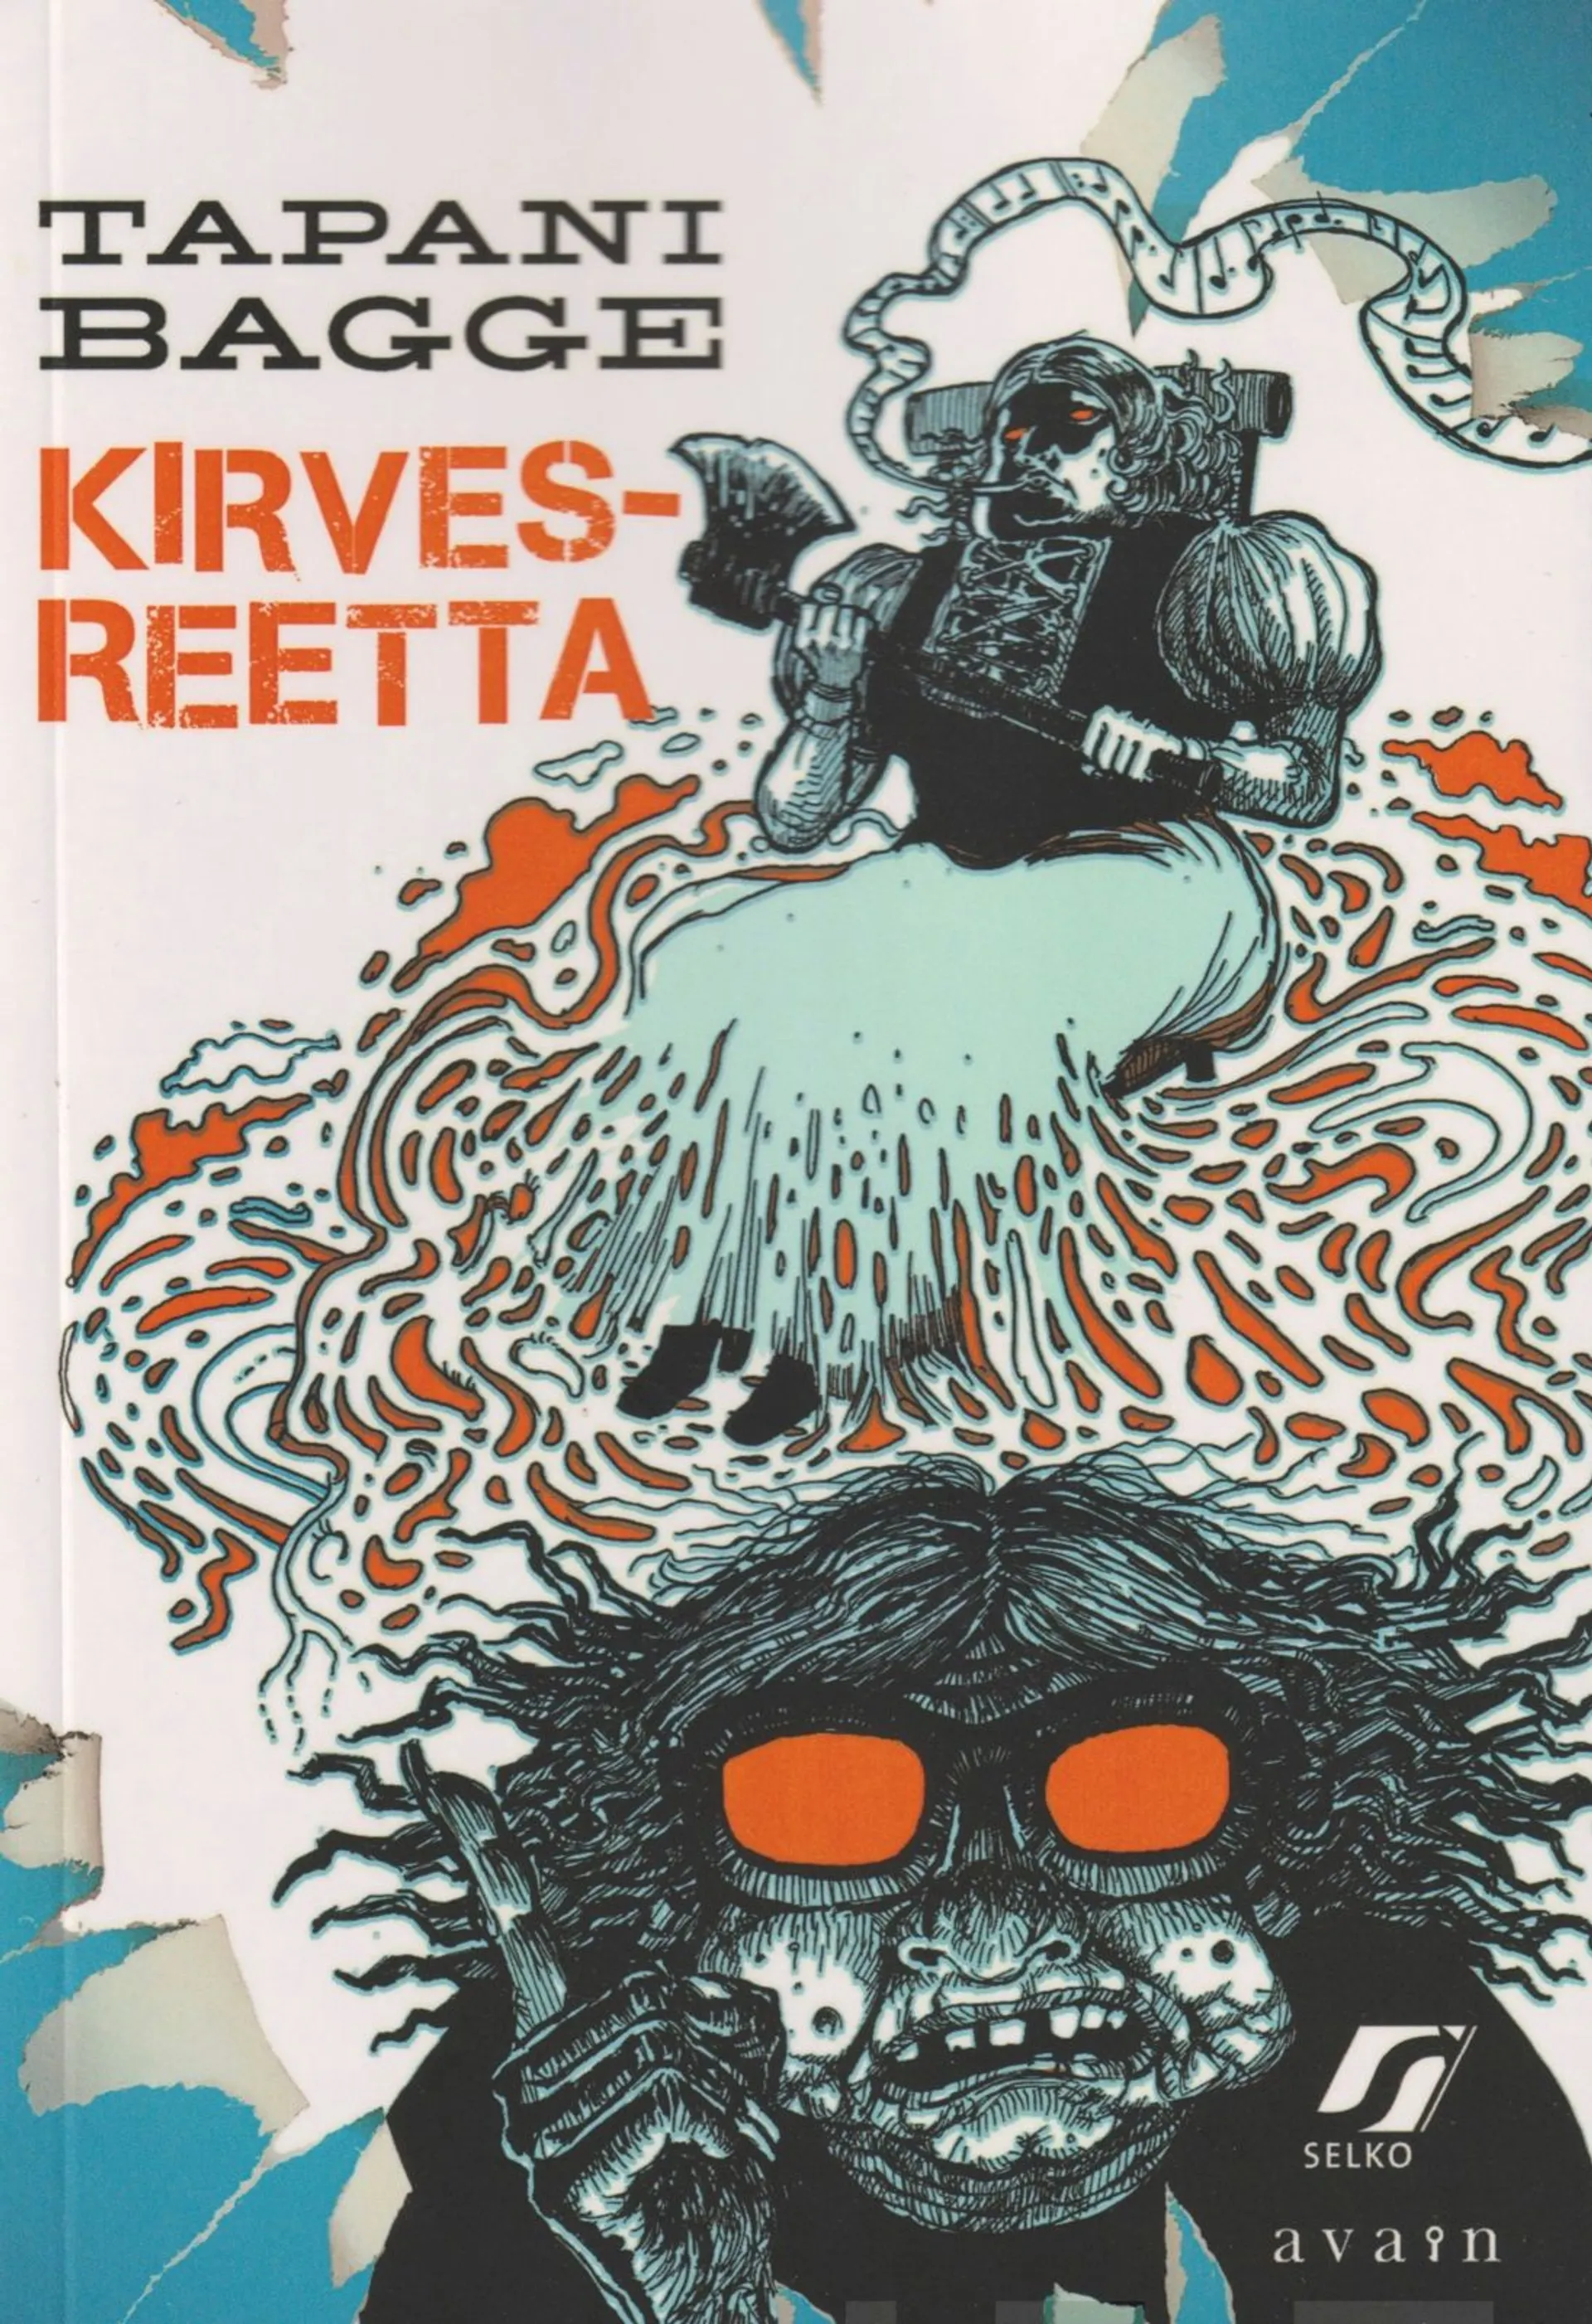 Bagge, Kirves-Reetta